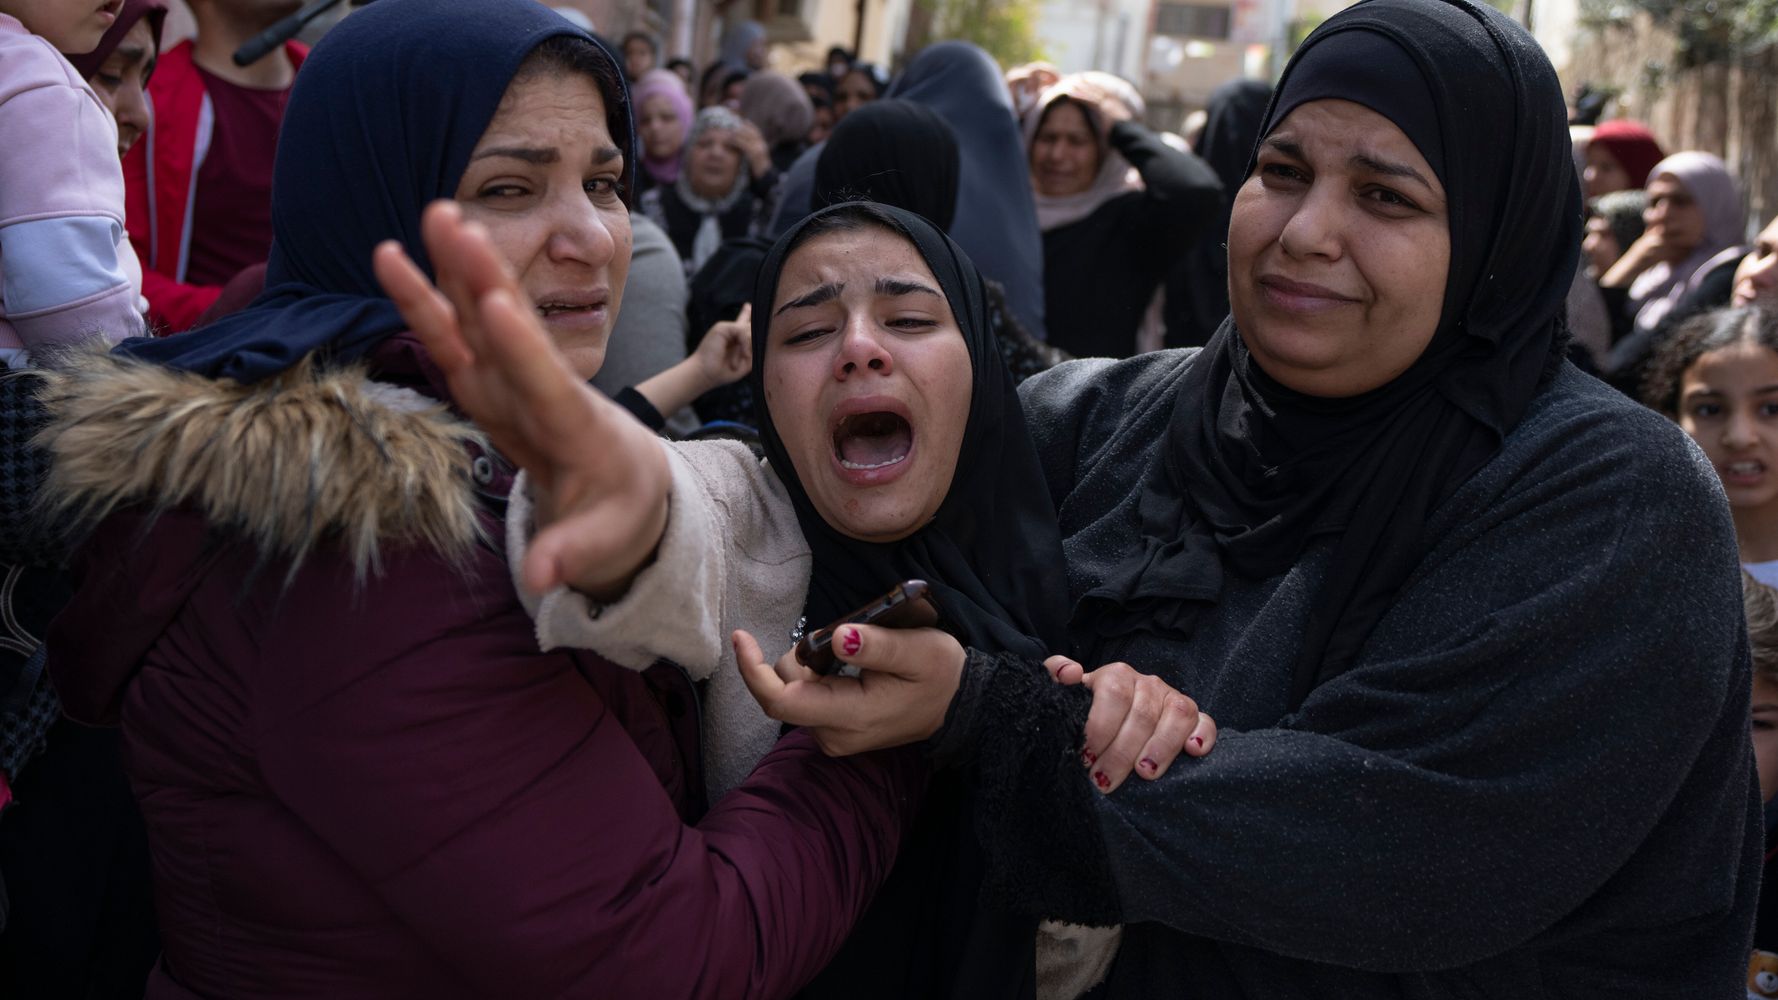 Israeli Forces Kill 3 Palestinians, Raising Fears Of Ramadan Clashes